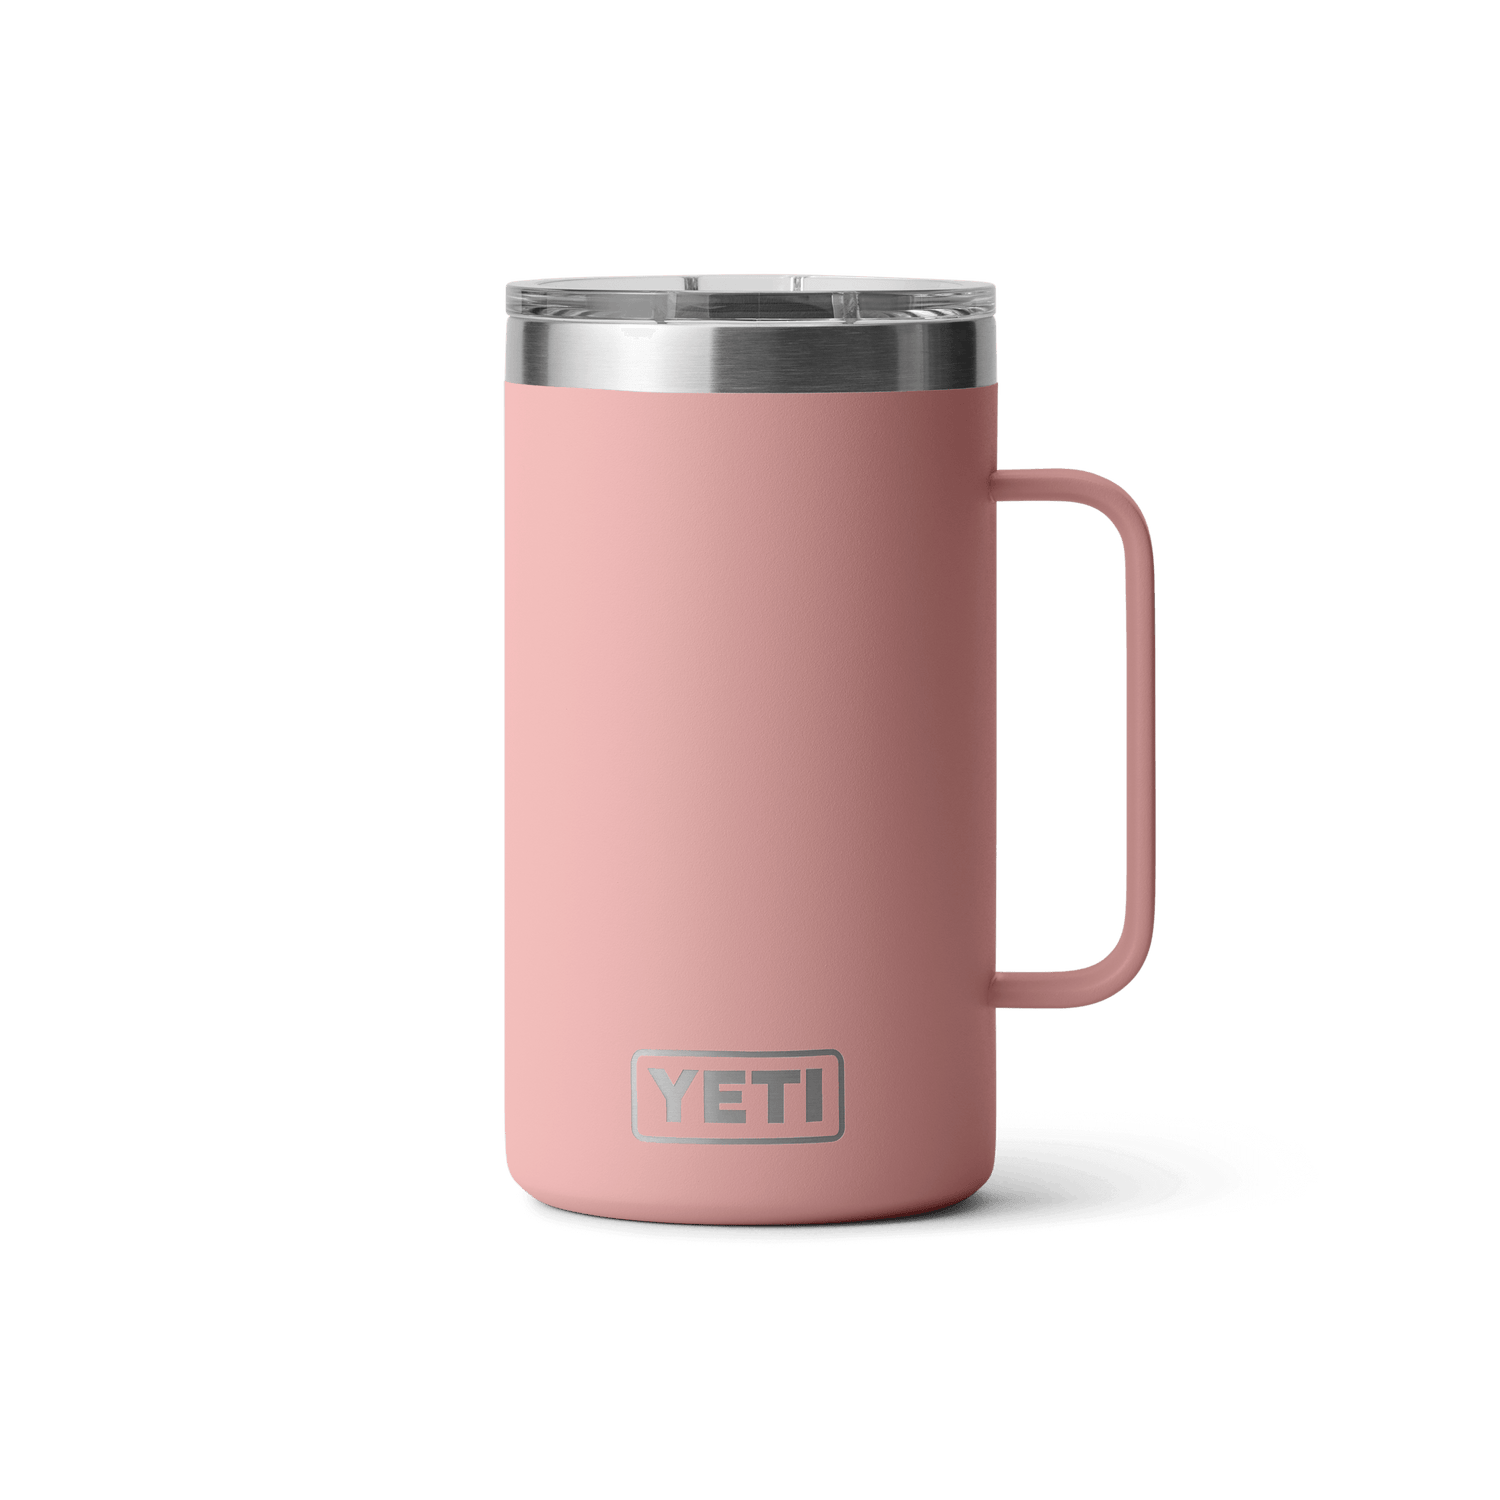 Discontinued Yeti Rambler 20oz Mug ice Pink Color 